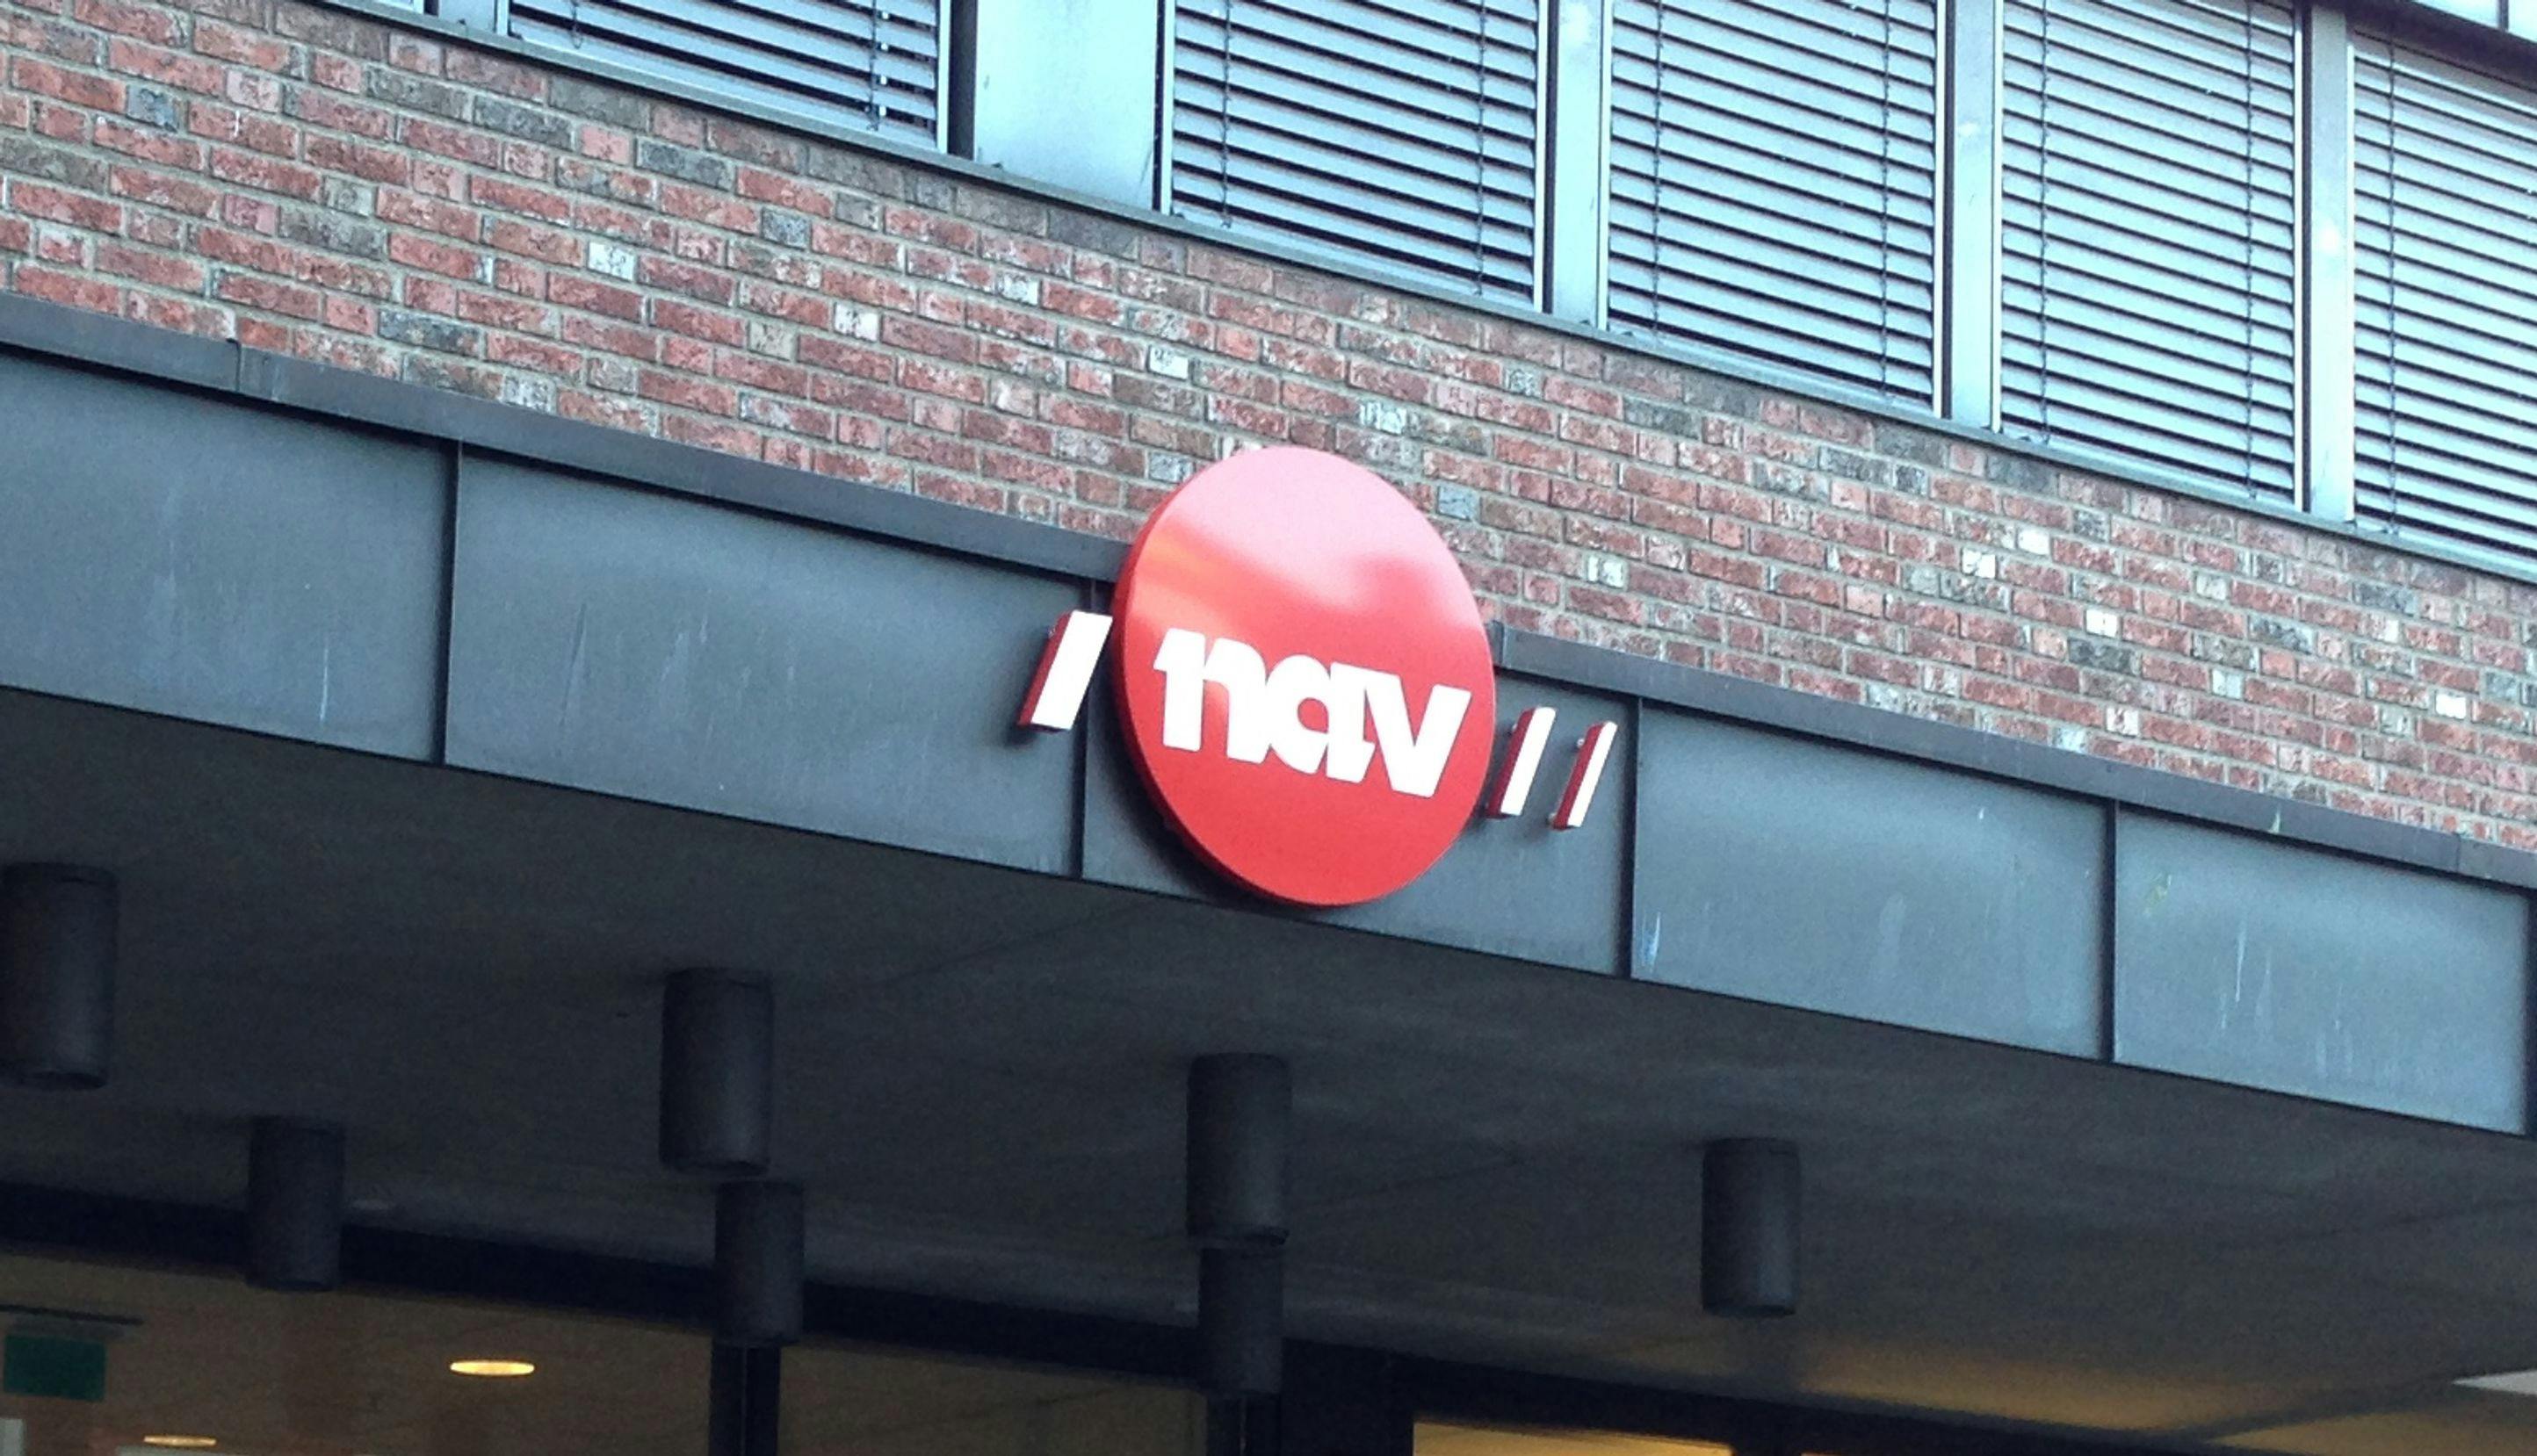 Kontor med NAV-logo.